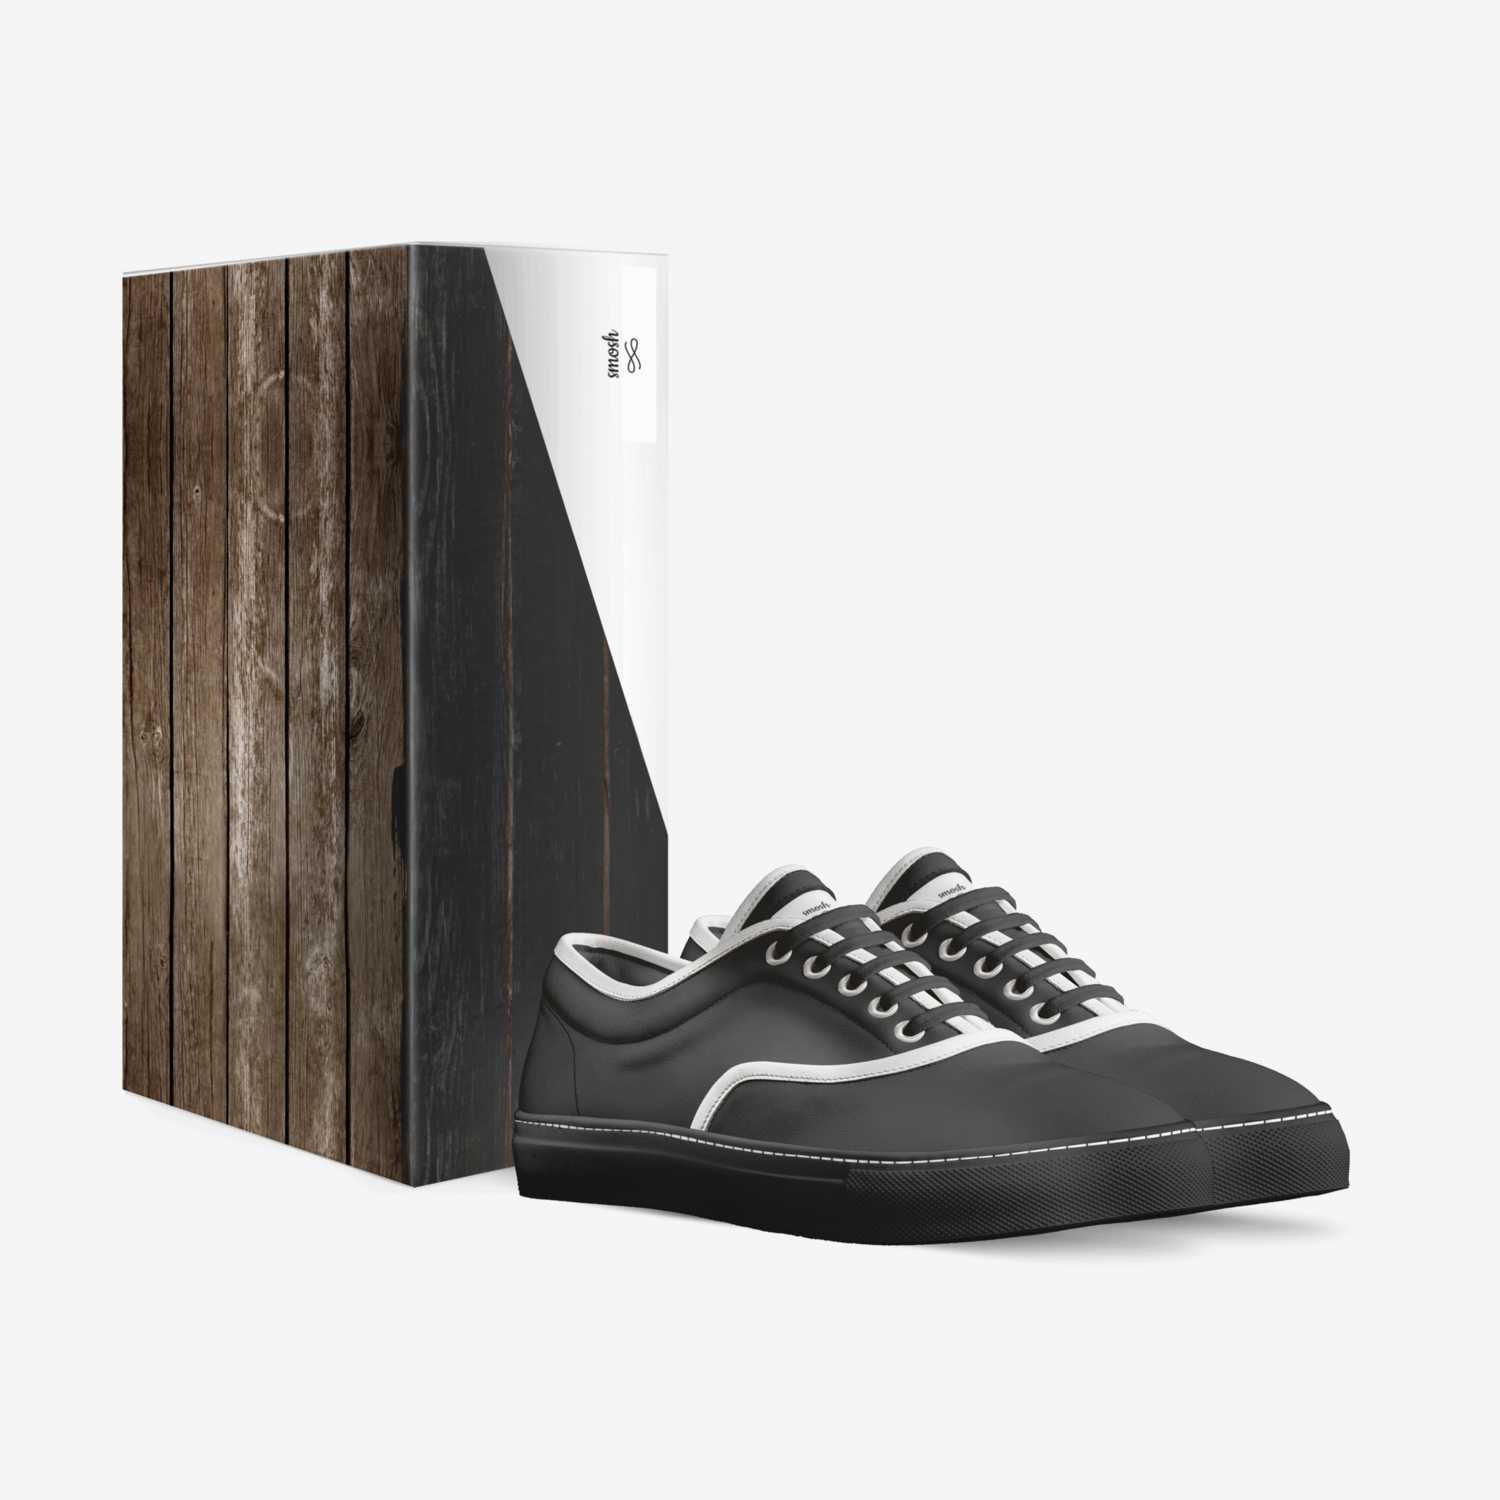 smosh custom made in Italy shoes by Matt Smith | Box view